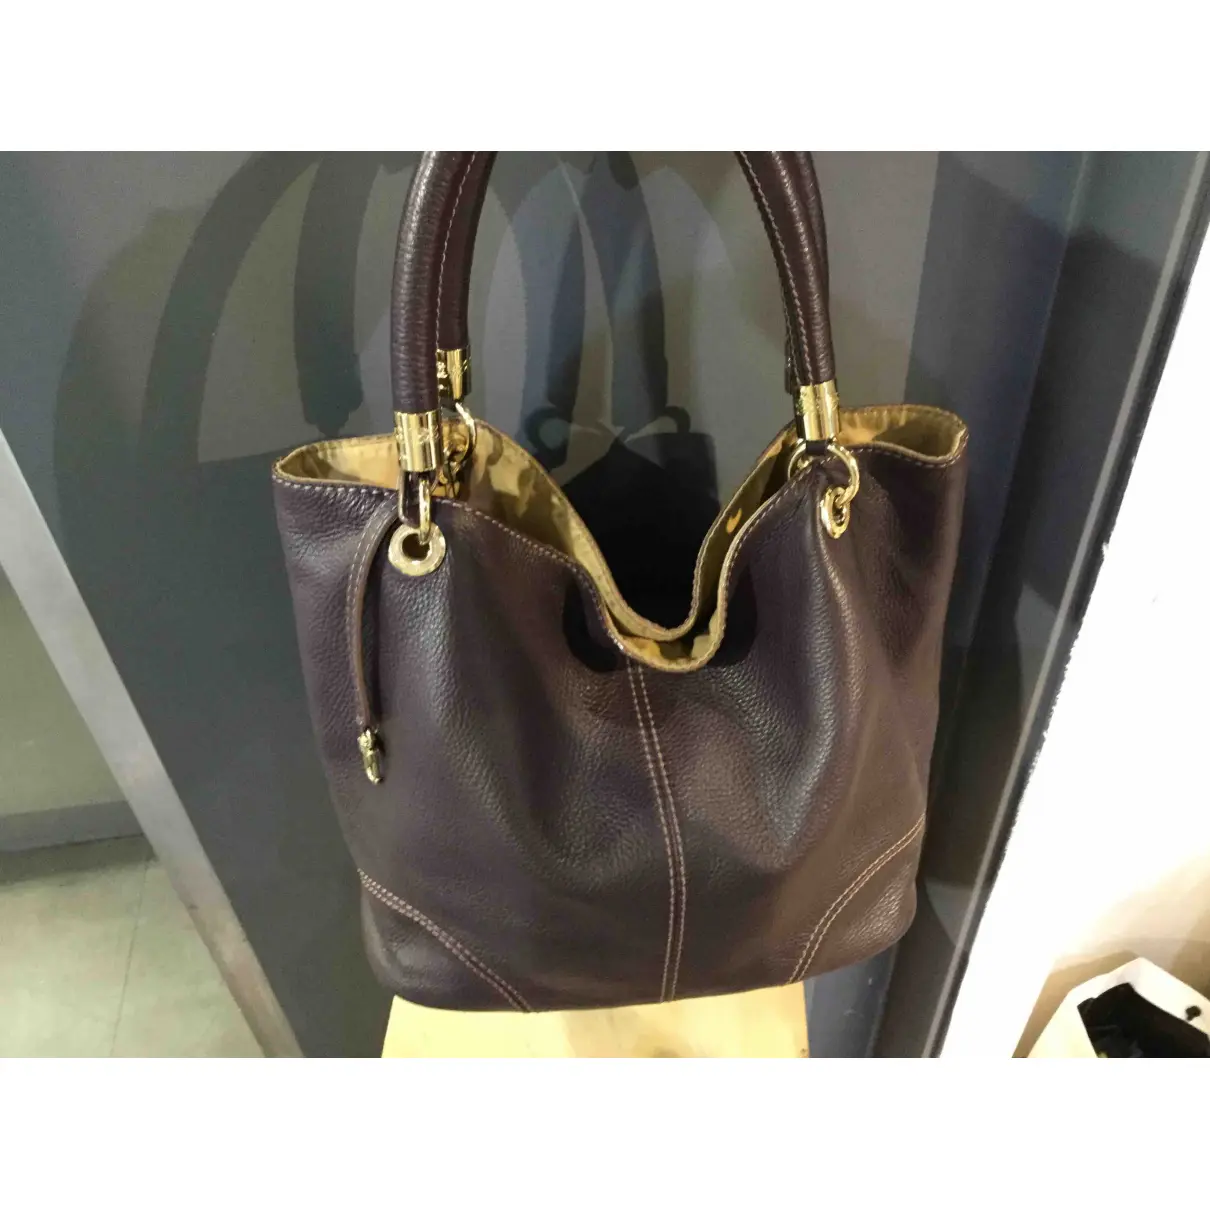 Buy Lancel French Flair leather handbag online